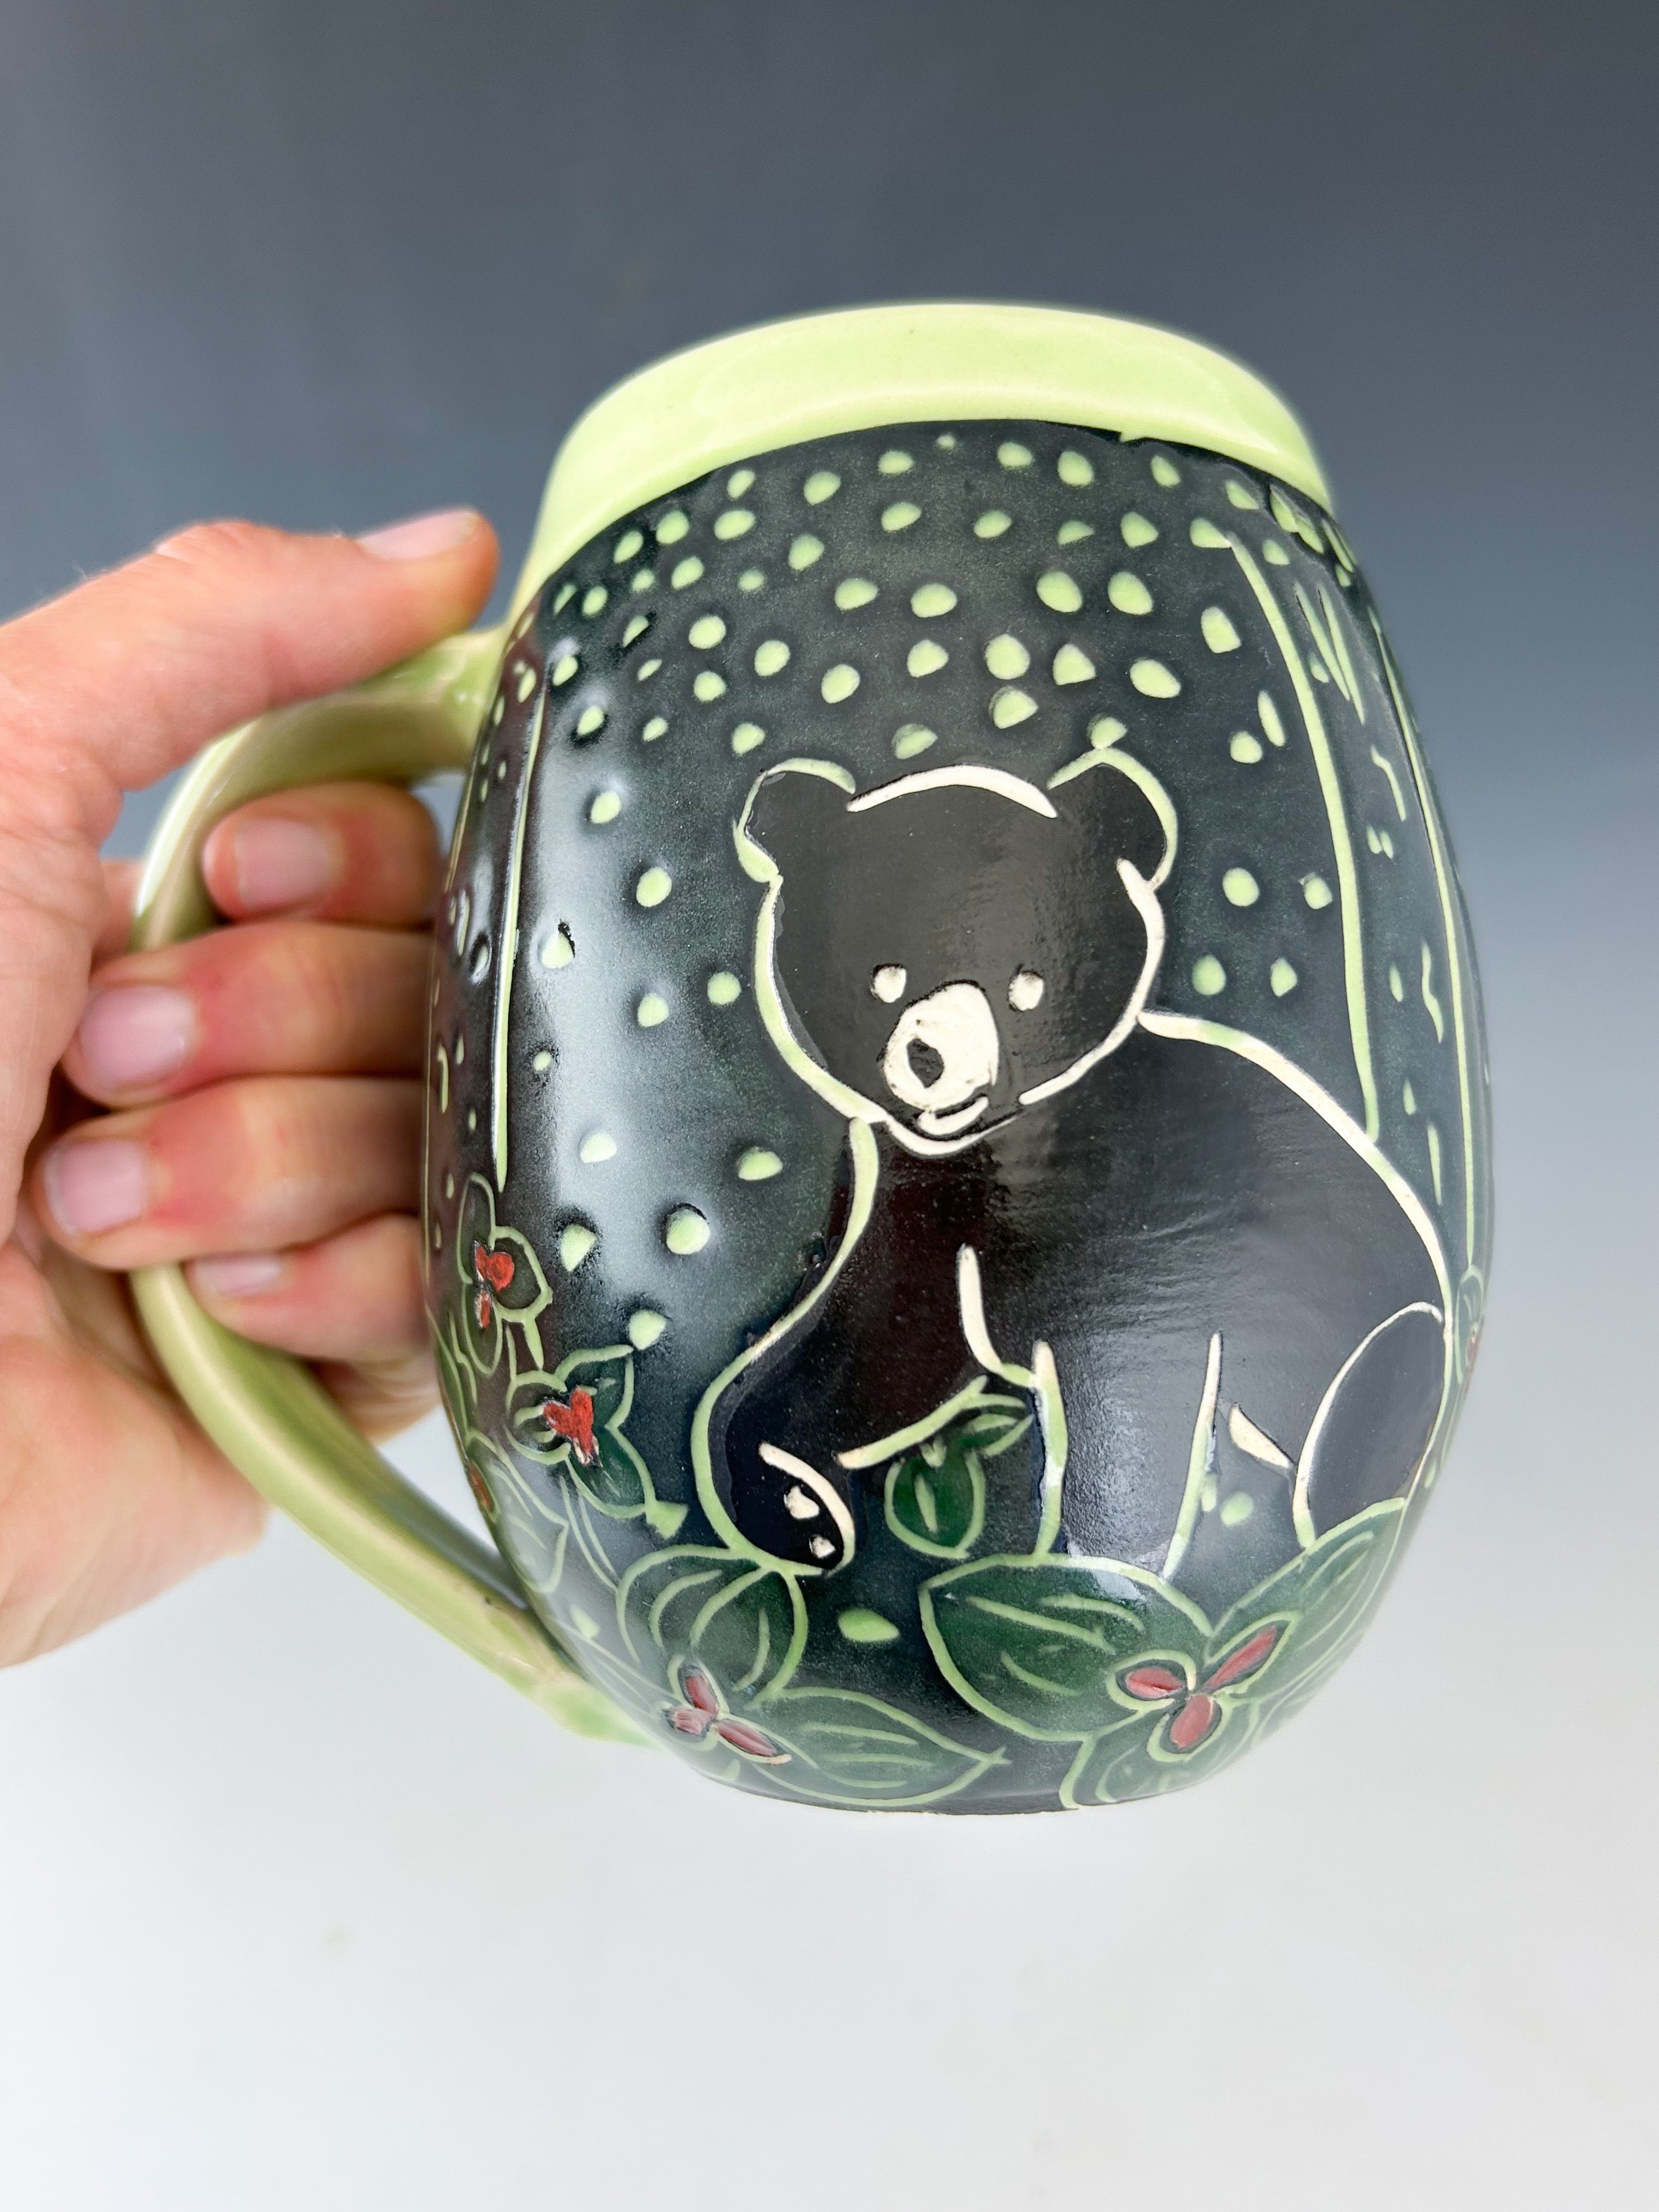 Spring Bear Mug in Green